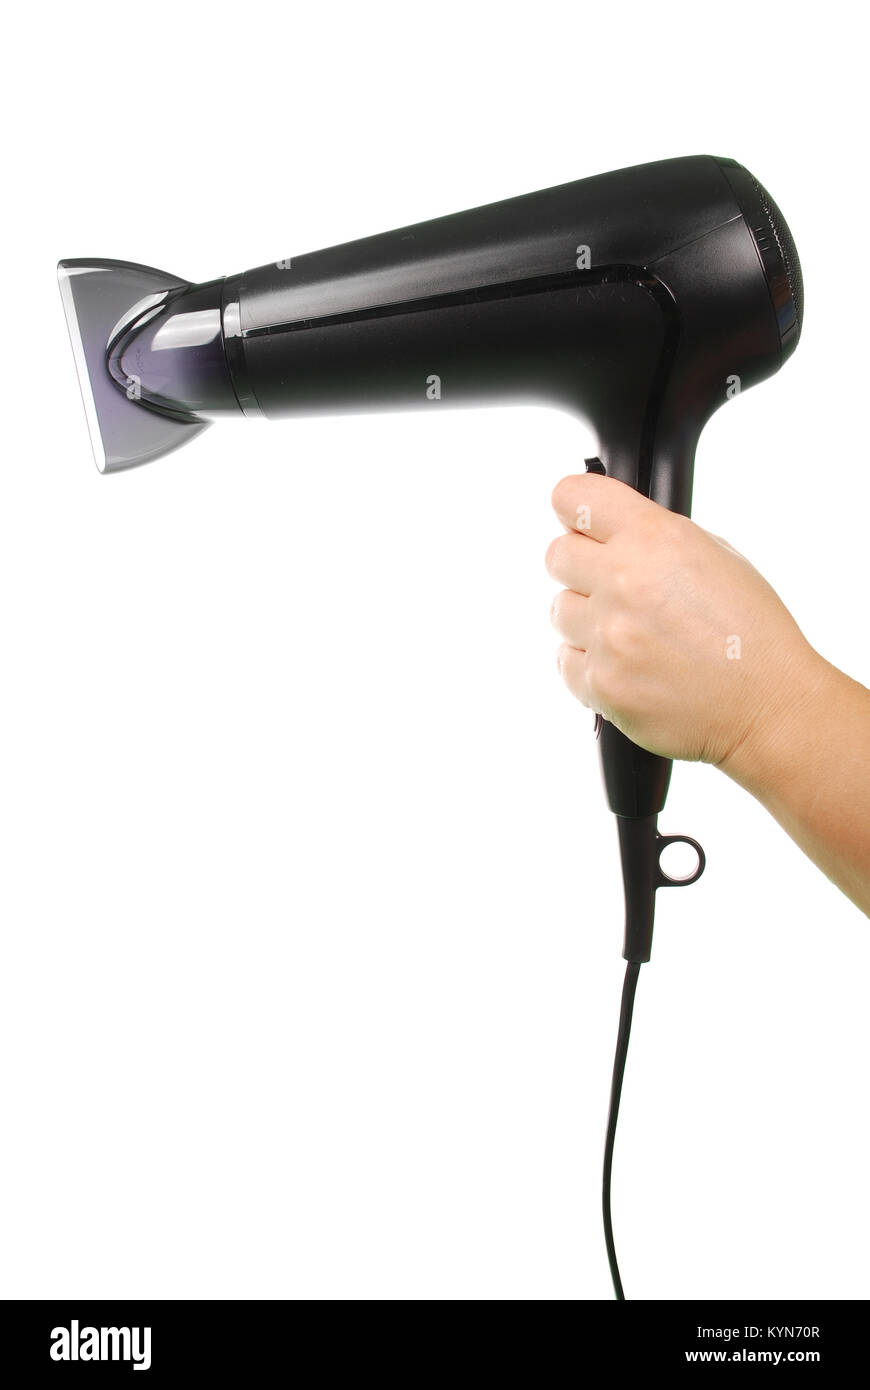 Hand holding black hair dryer isolated on white background Stock Photo -  Alamy